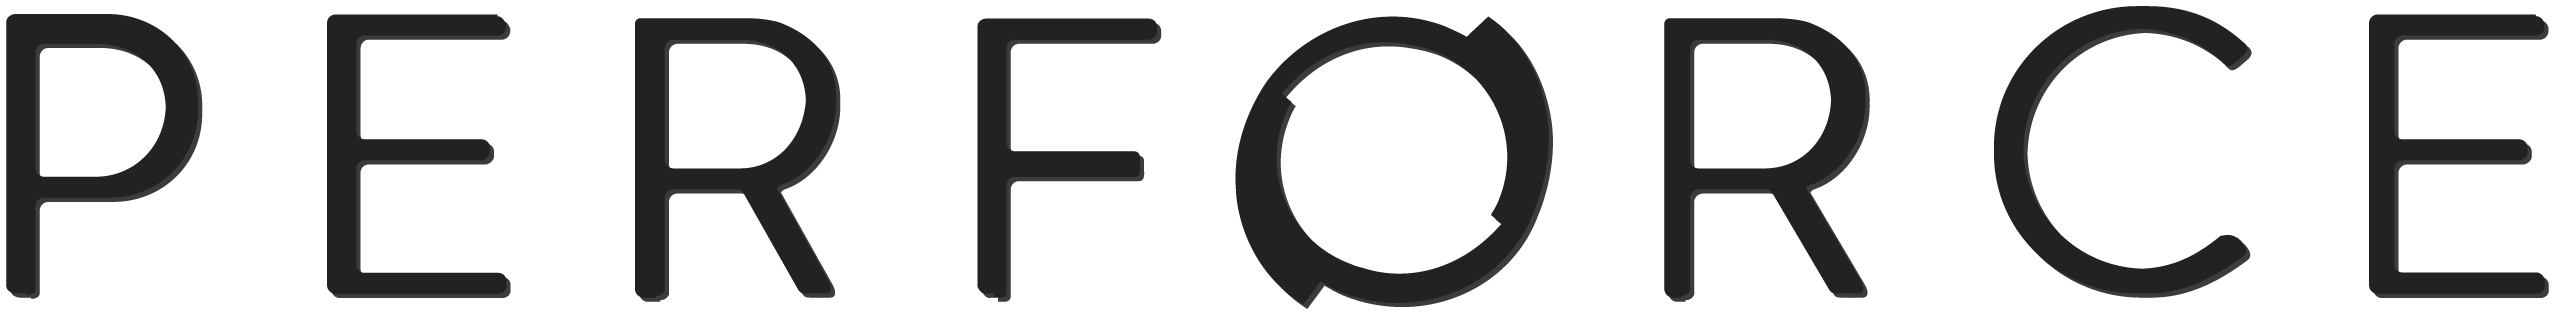 Perforce logo